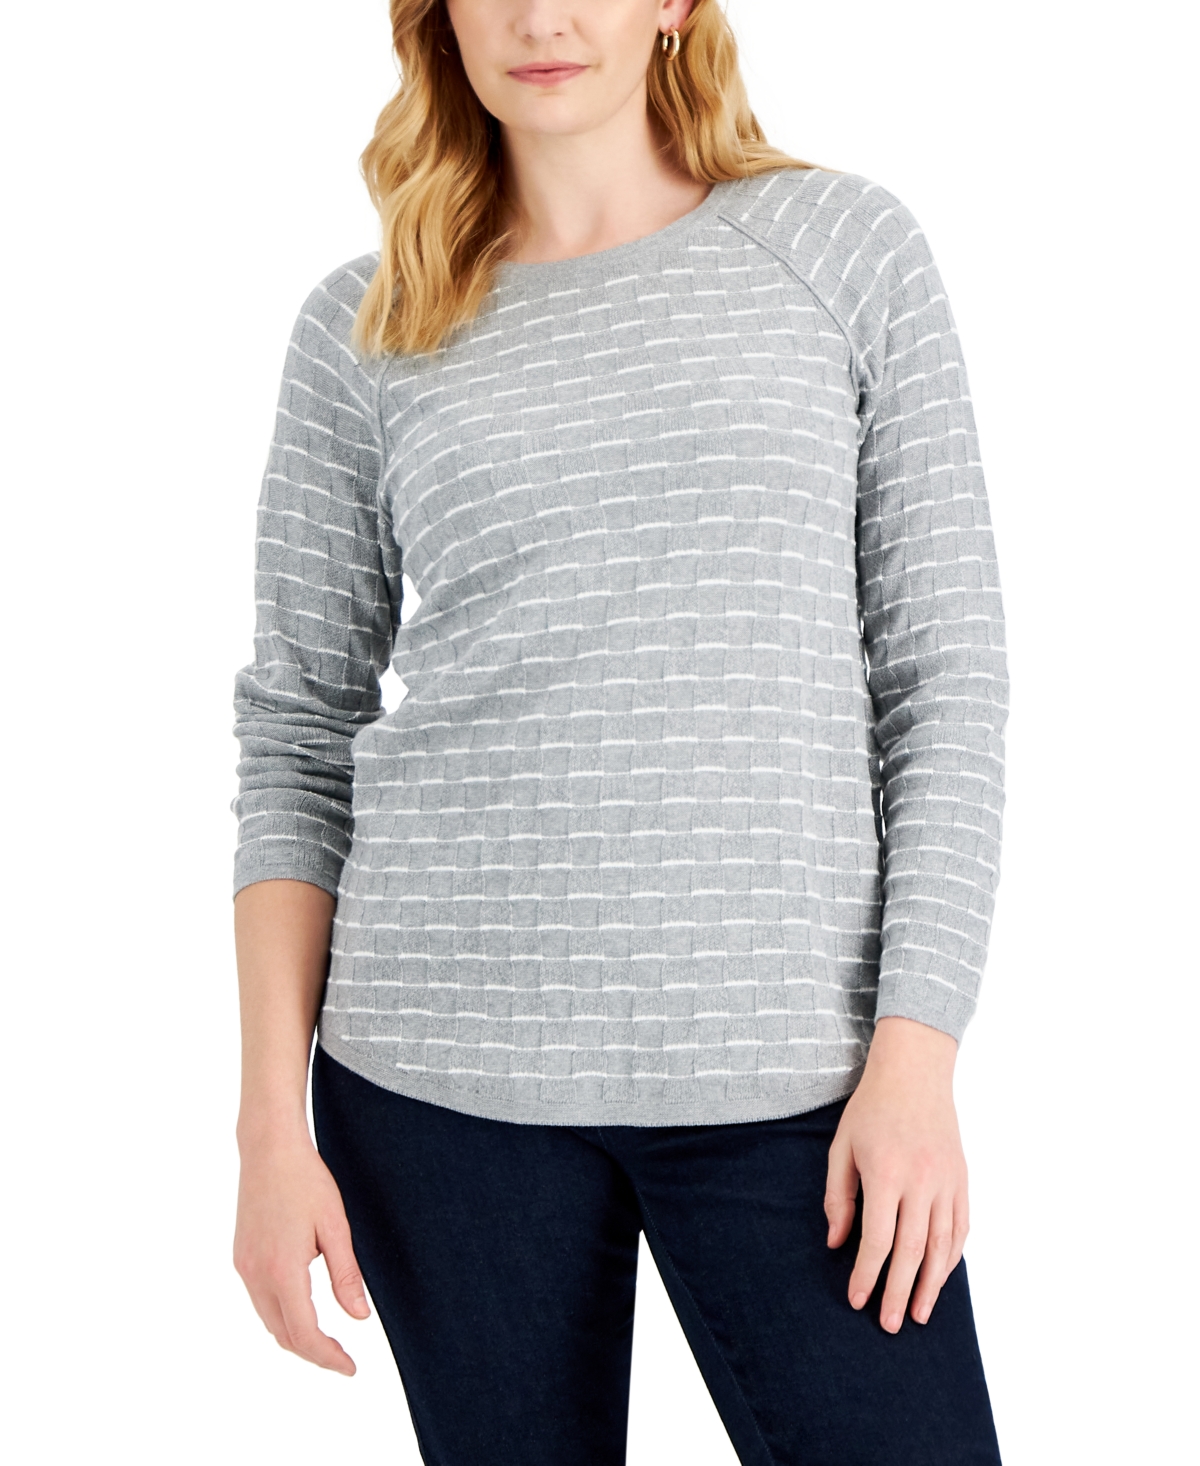 Women's Cotton Tuck-Stitch Sweater, Created for Macy's - Smoke/White Combo